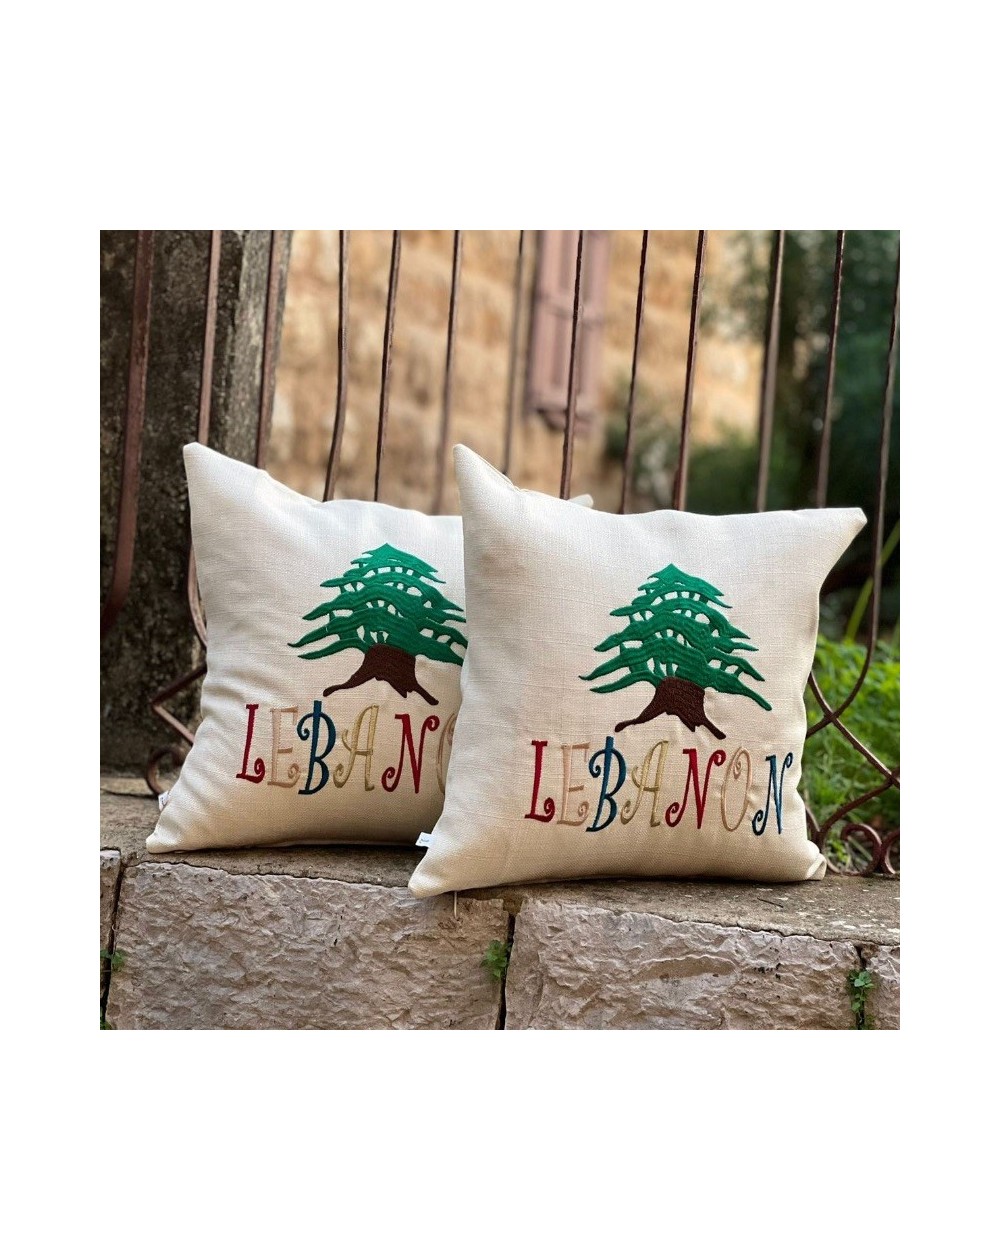 Cushion Throw pillow flag Lebanon, cedar planted, Lebanese Coffee cup